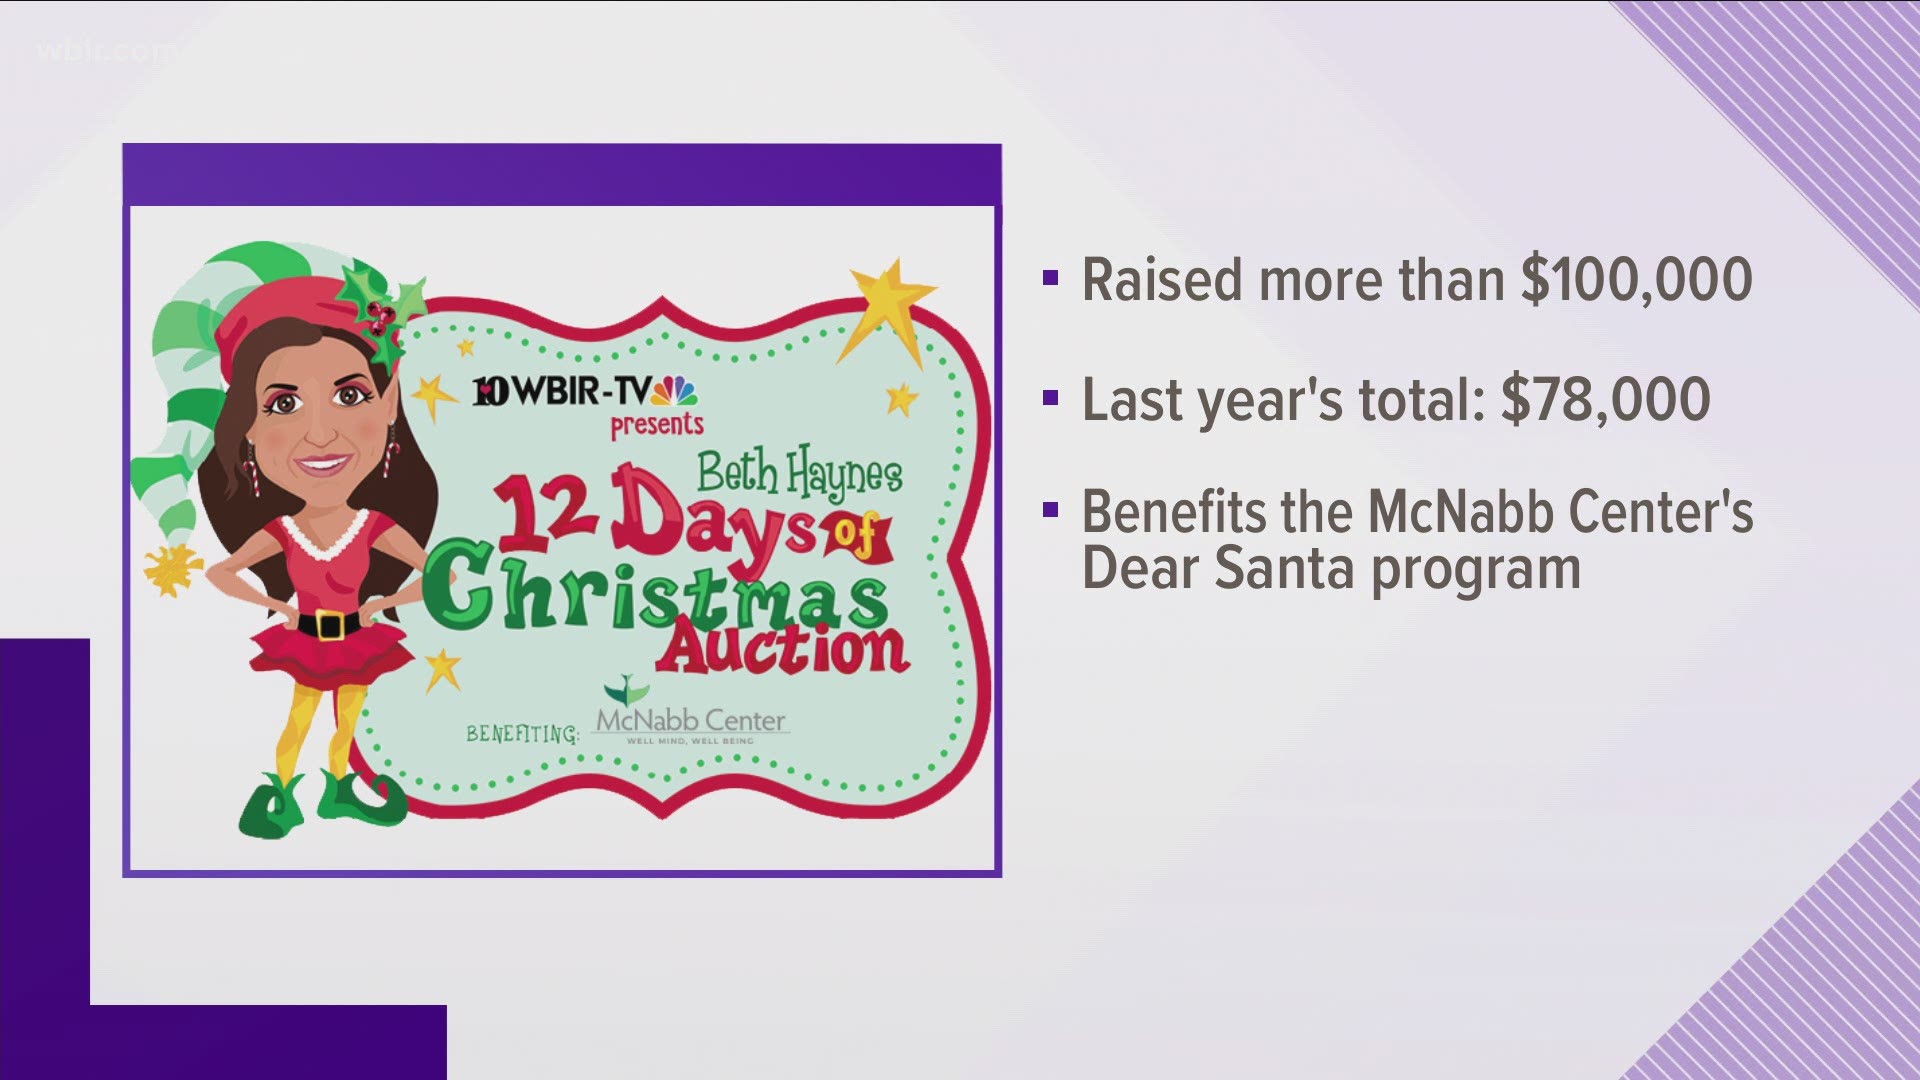 The Beth Haynes 12 Days of Christmas Auction raised more than $100,000 for the McNabb Center's Dear Santa program.